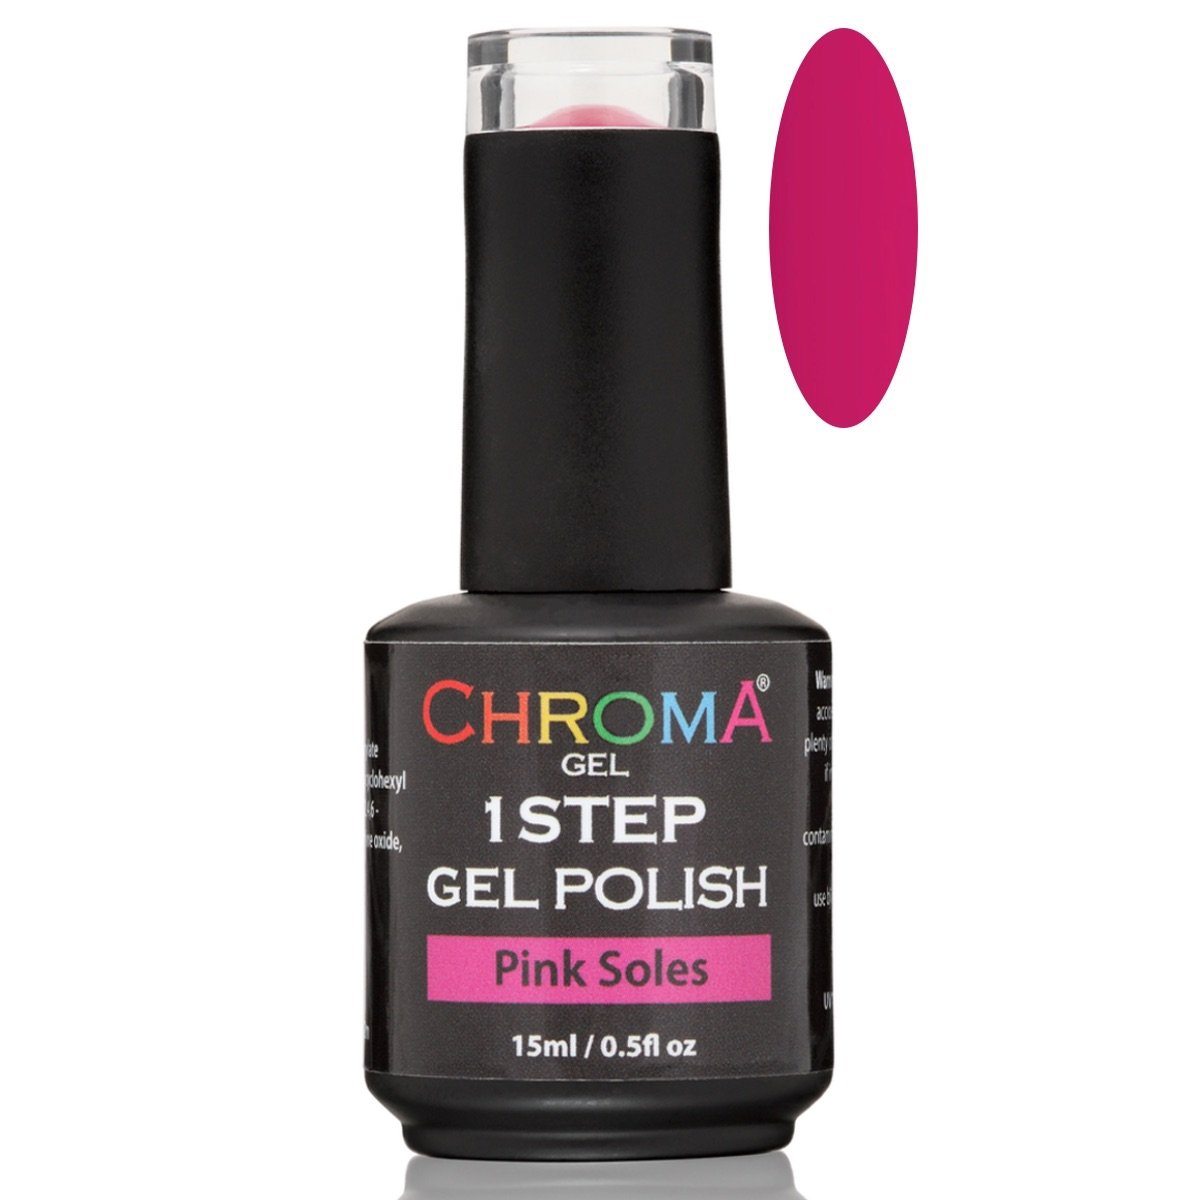 Chroma Gel 1 Step Gel Polish Pink Soles No.11 - Beauty Hair Products LtdChroma Gel